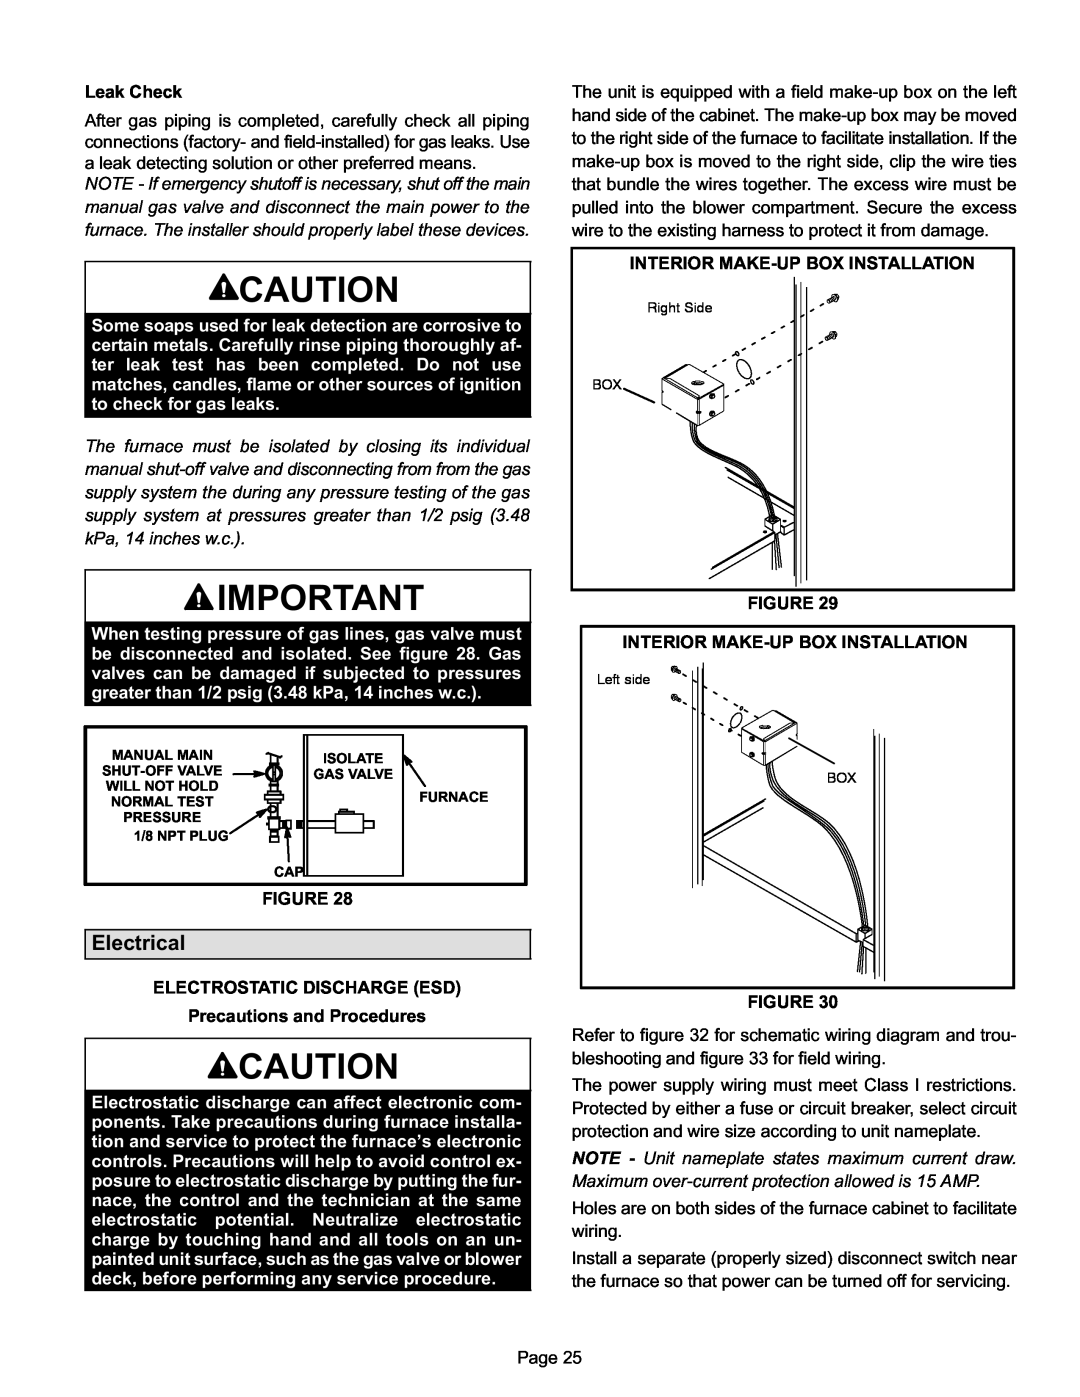 Lennox International Inc Merit Series Gas Furnace installation instructions Electrical 